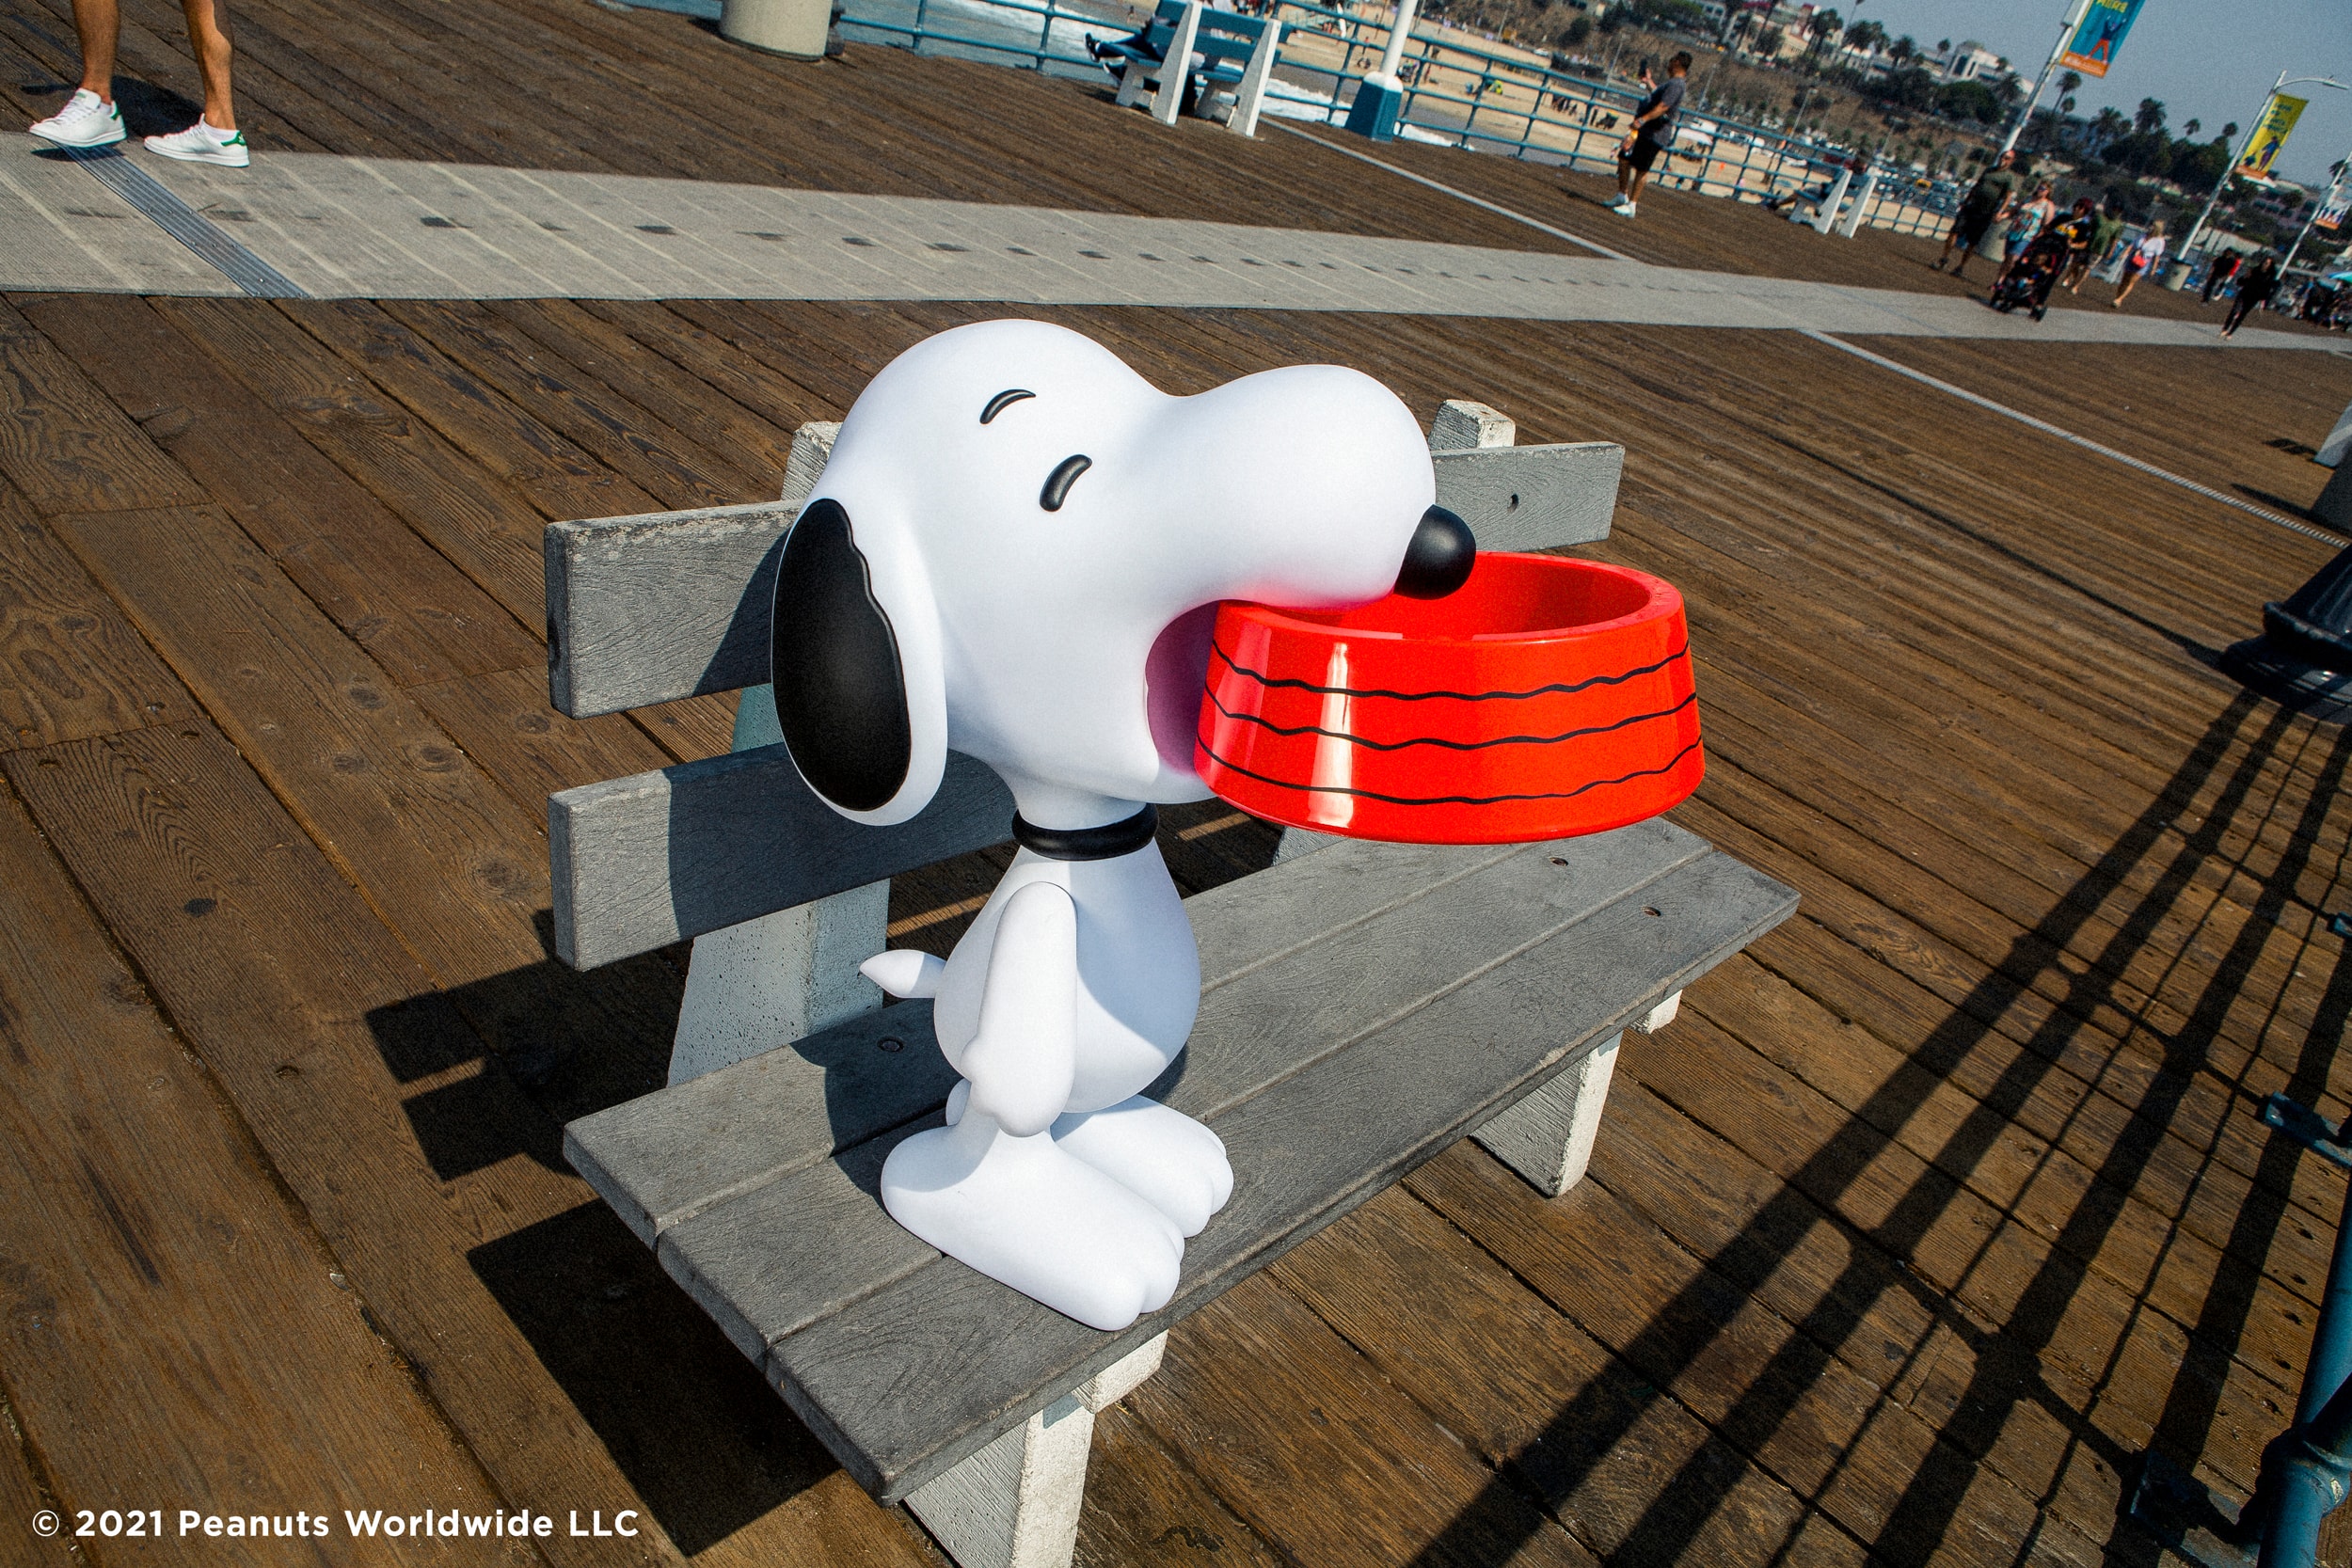 Snoopy x Objective Collectibles x Medicom Toy 聯乘「1:1 真實尺寸 Snoopy 雕塑」登場